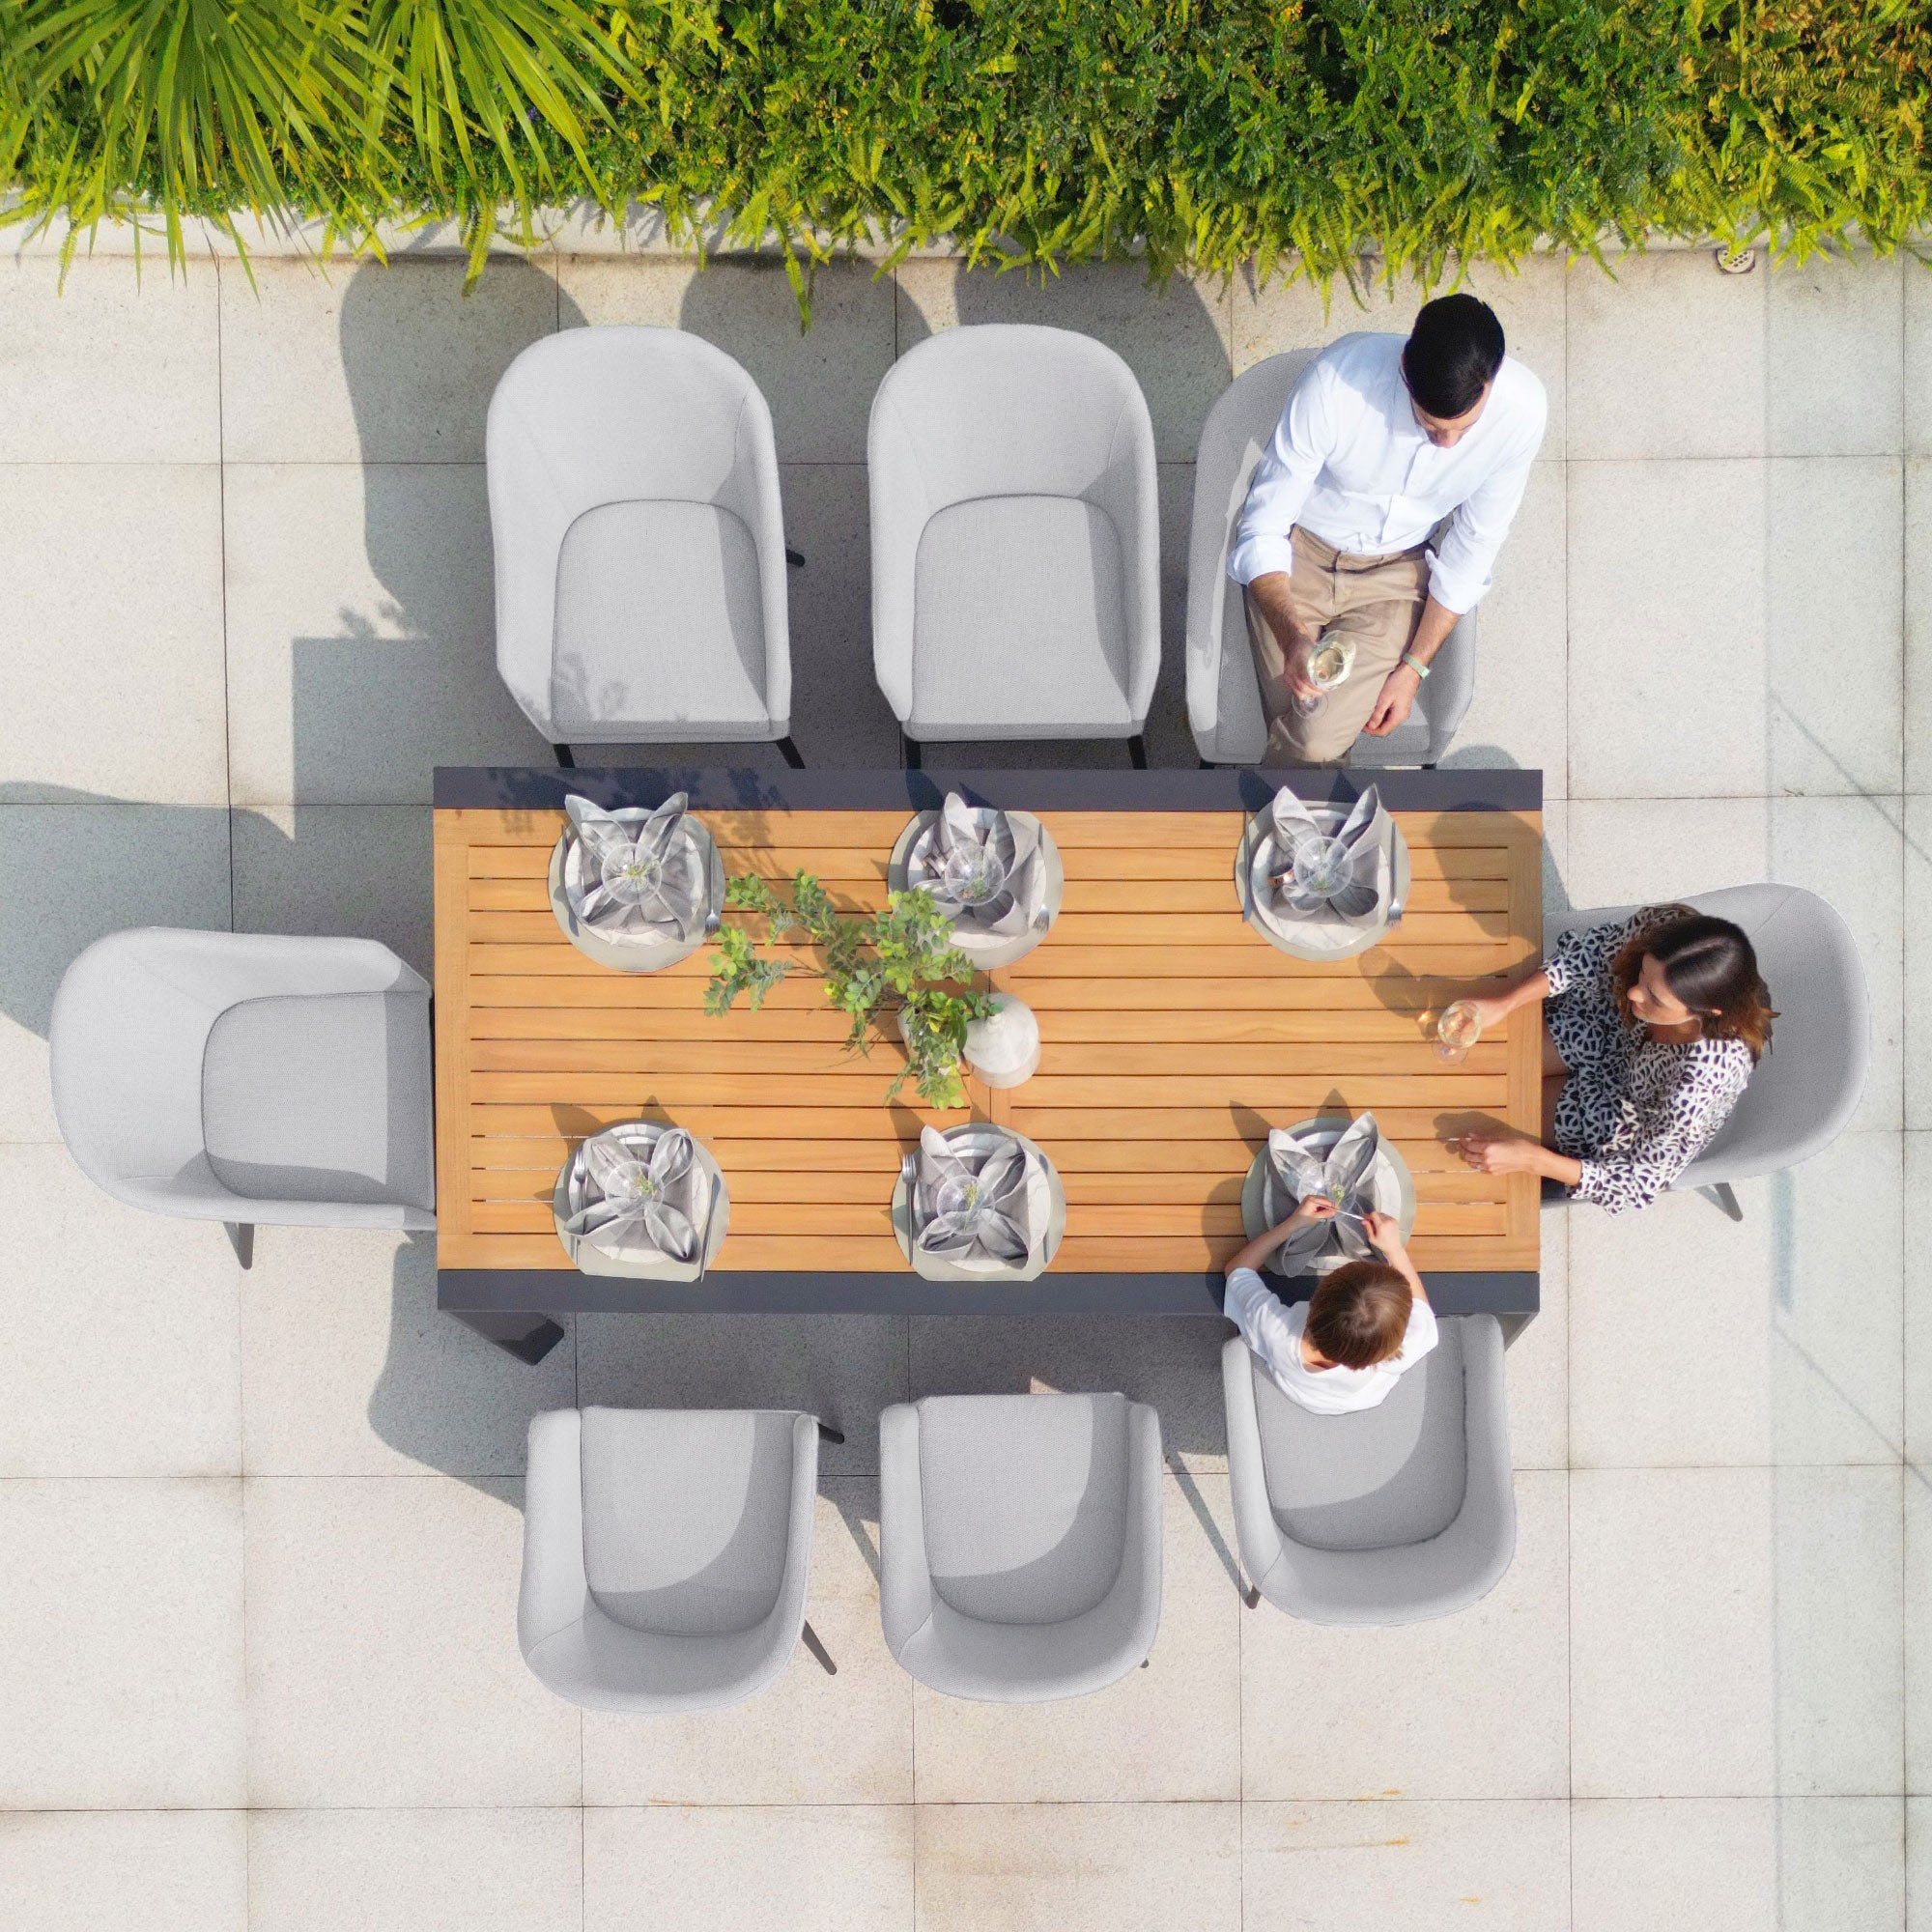 Luna 10 Seat Outdoor Fabric Extending Teak Dining Set in Oyster Grey